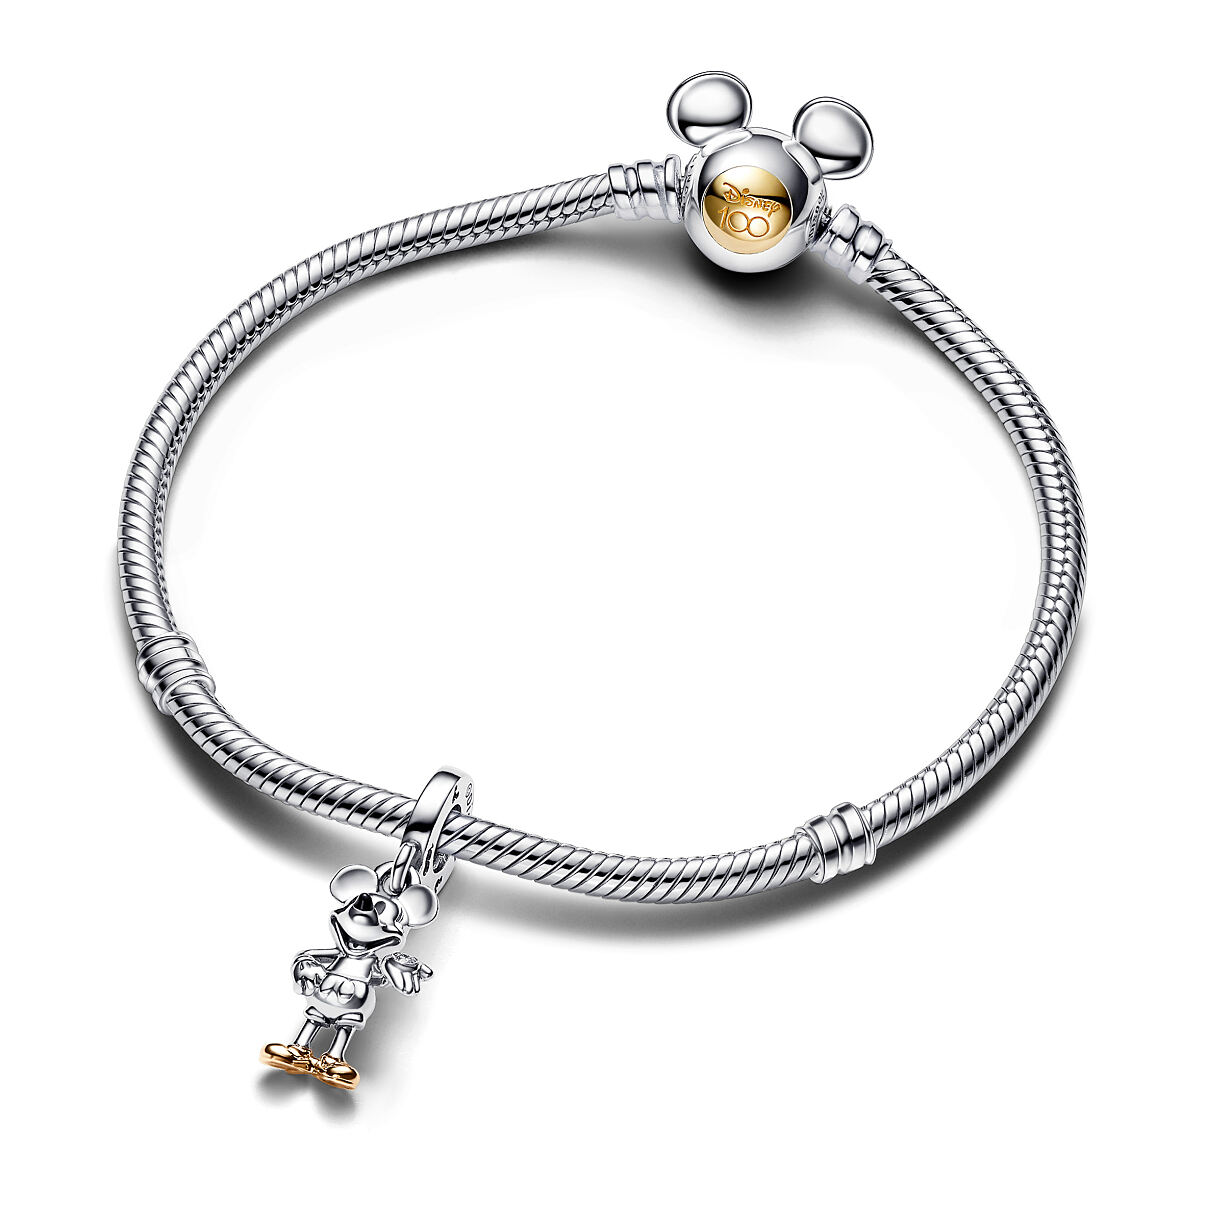 Pandora x Disney_Charm_Sterling Silver_14 K Gold_Diamond_with bracelet_792812C01_348,00 Euro